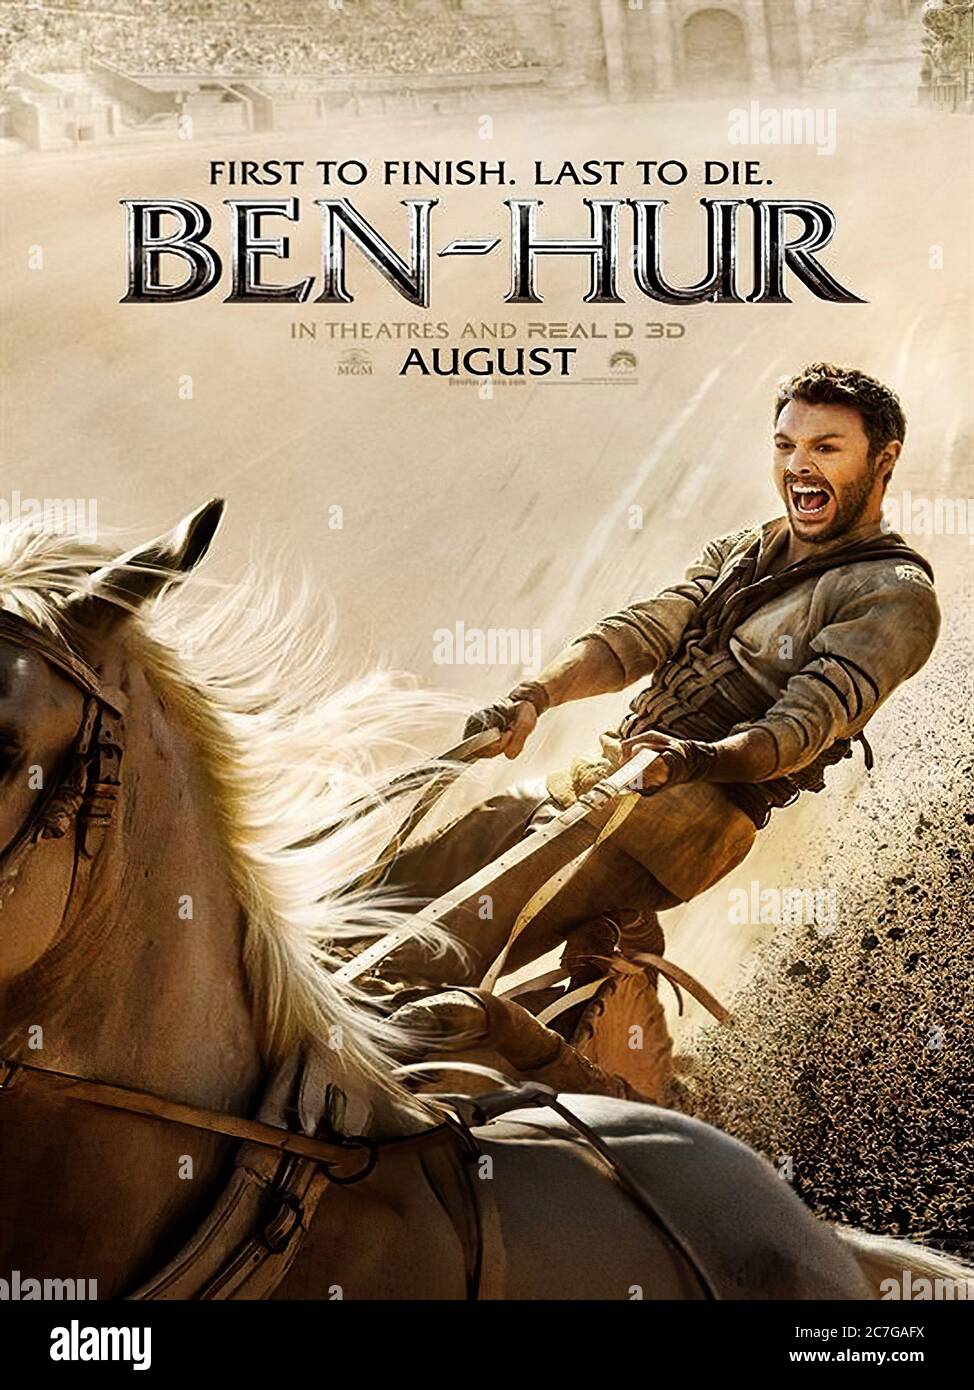 Ben Hur - Movie Poster Stock Photo